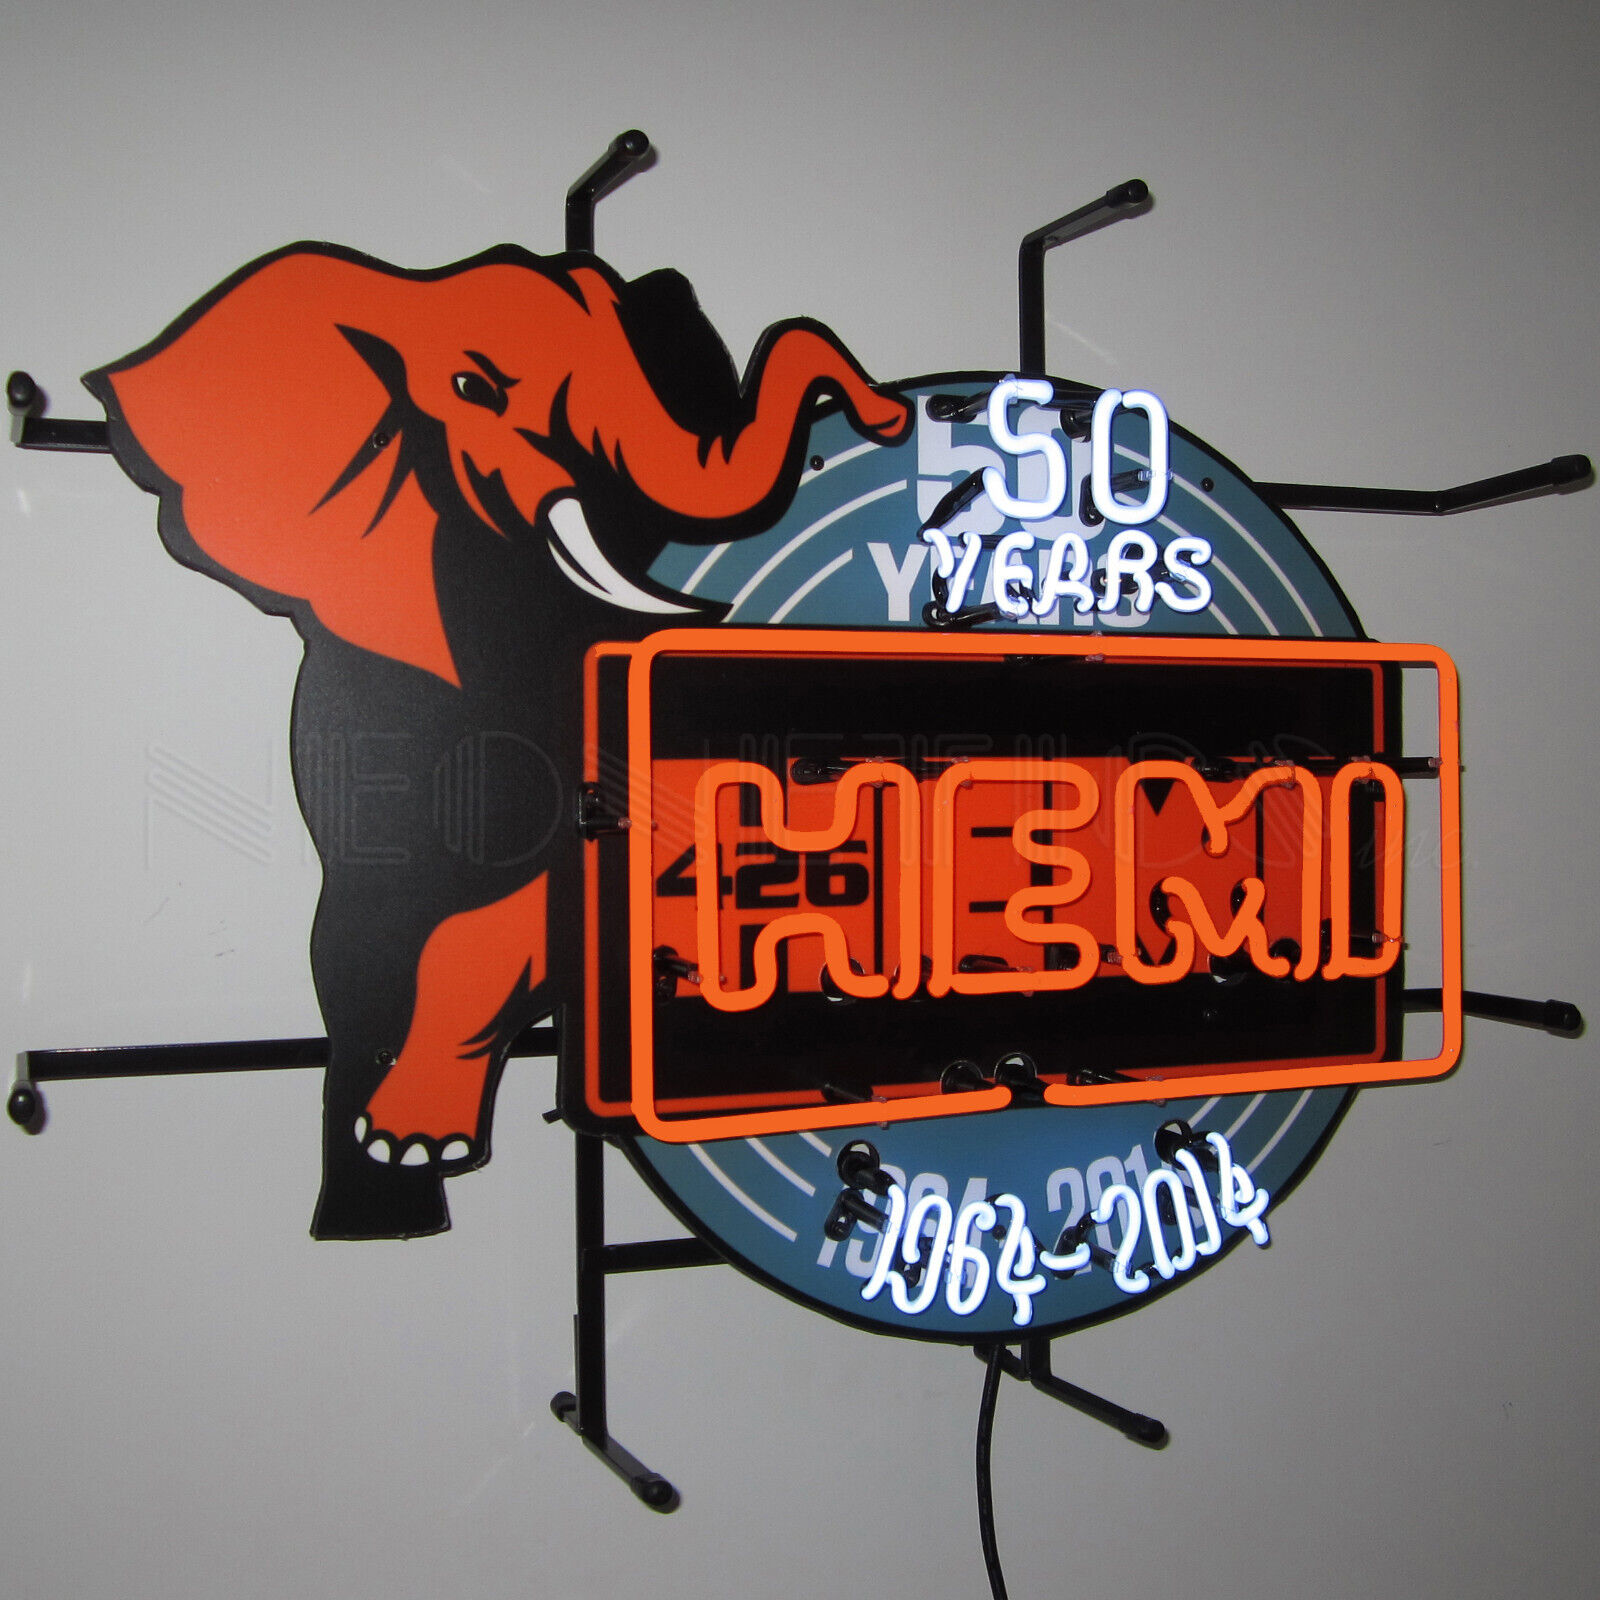 Hemi 426 Neon Sign Elephant 1964 2015 50th Anniversary Garage wall Lamp Mopar